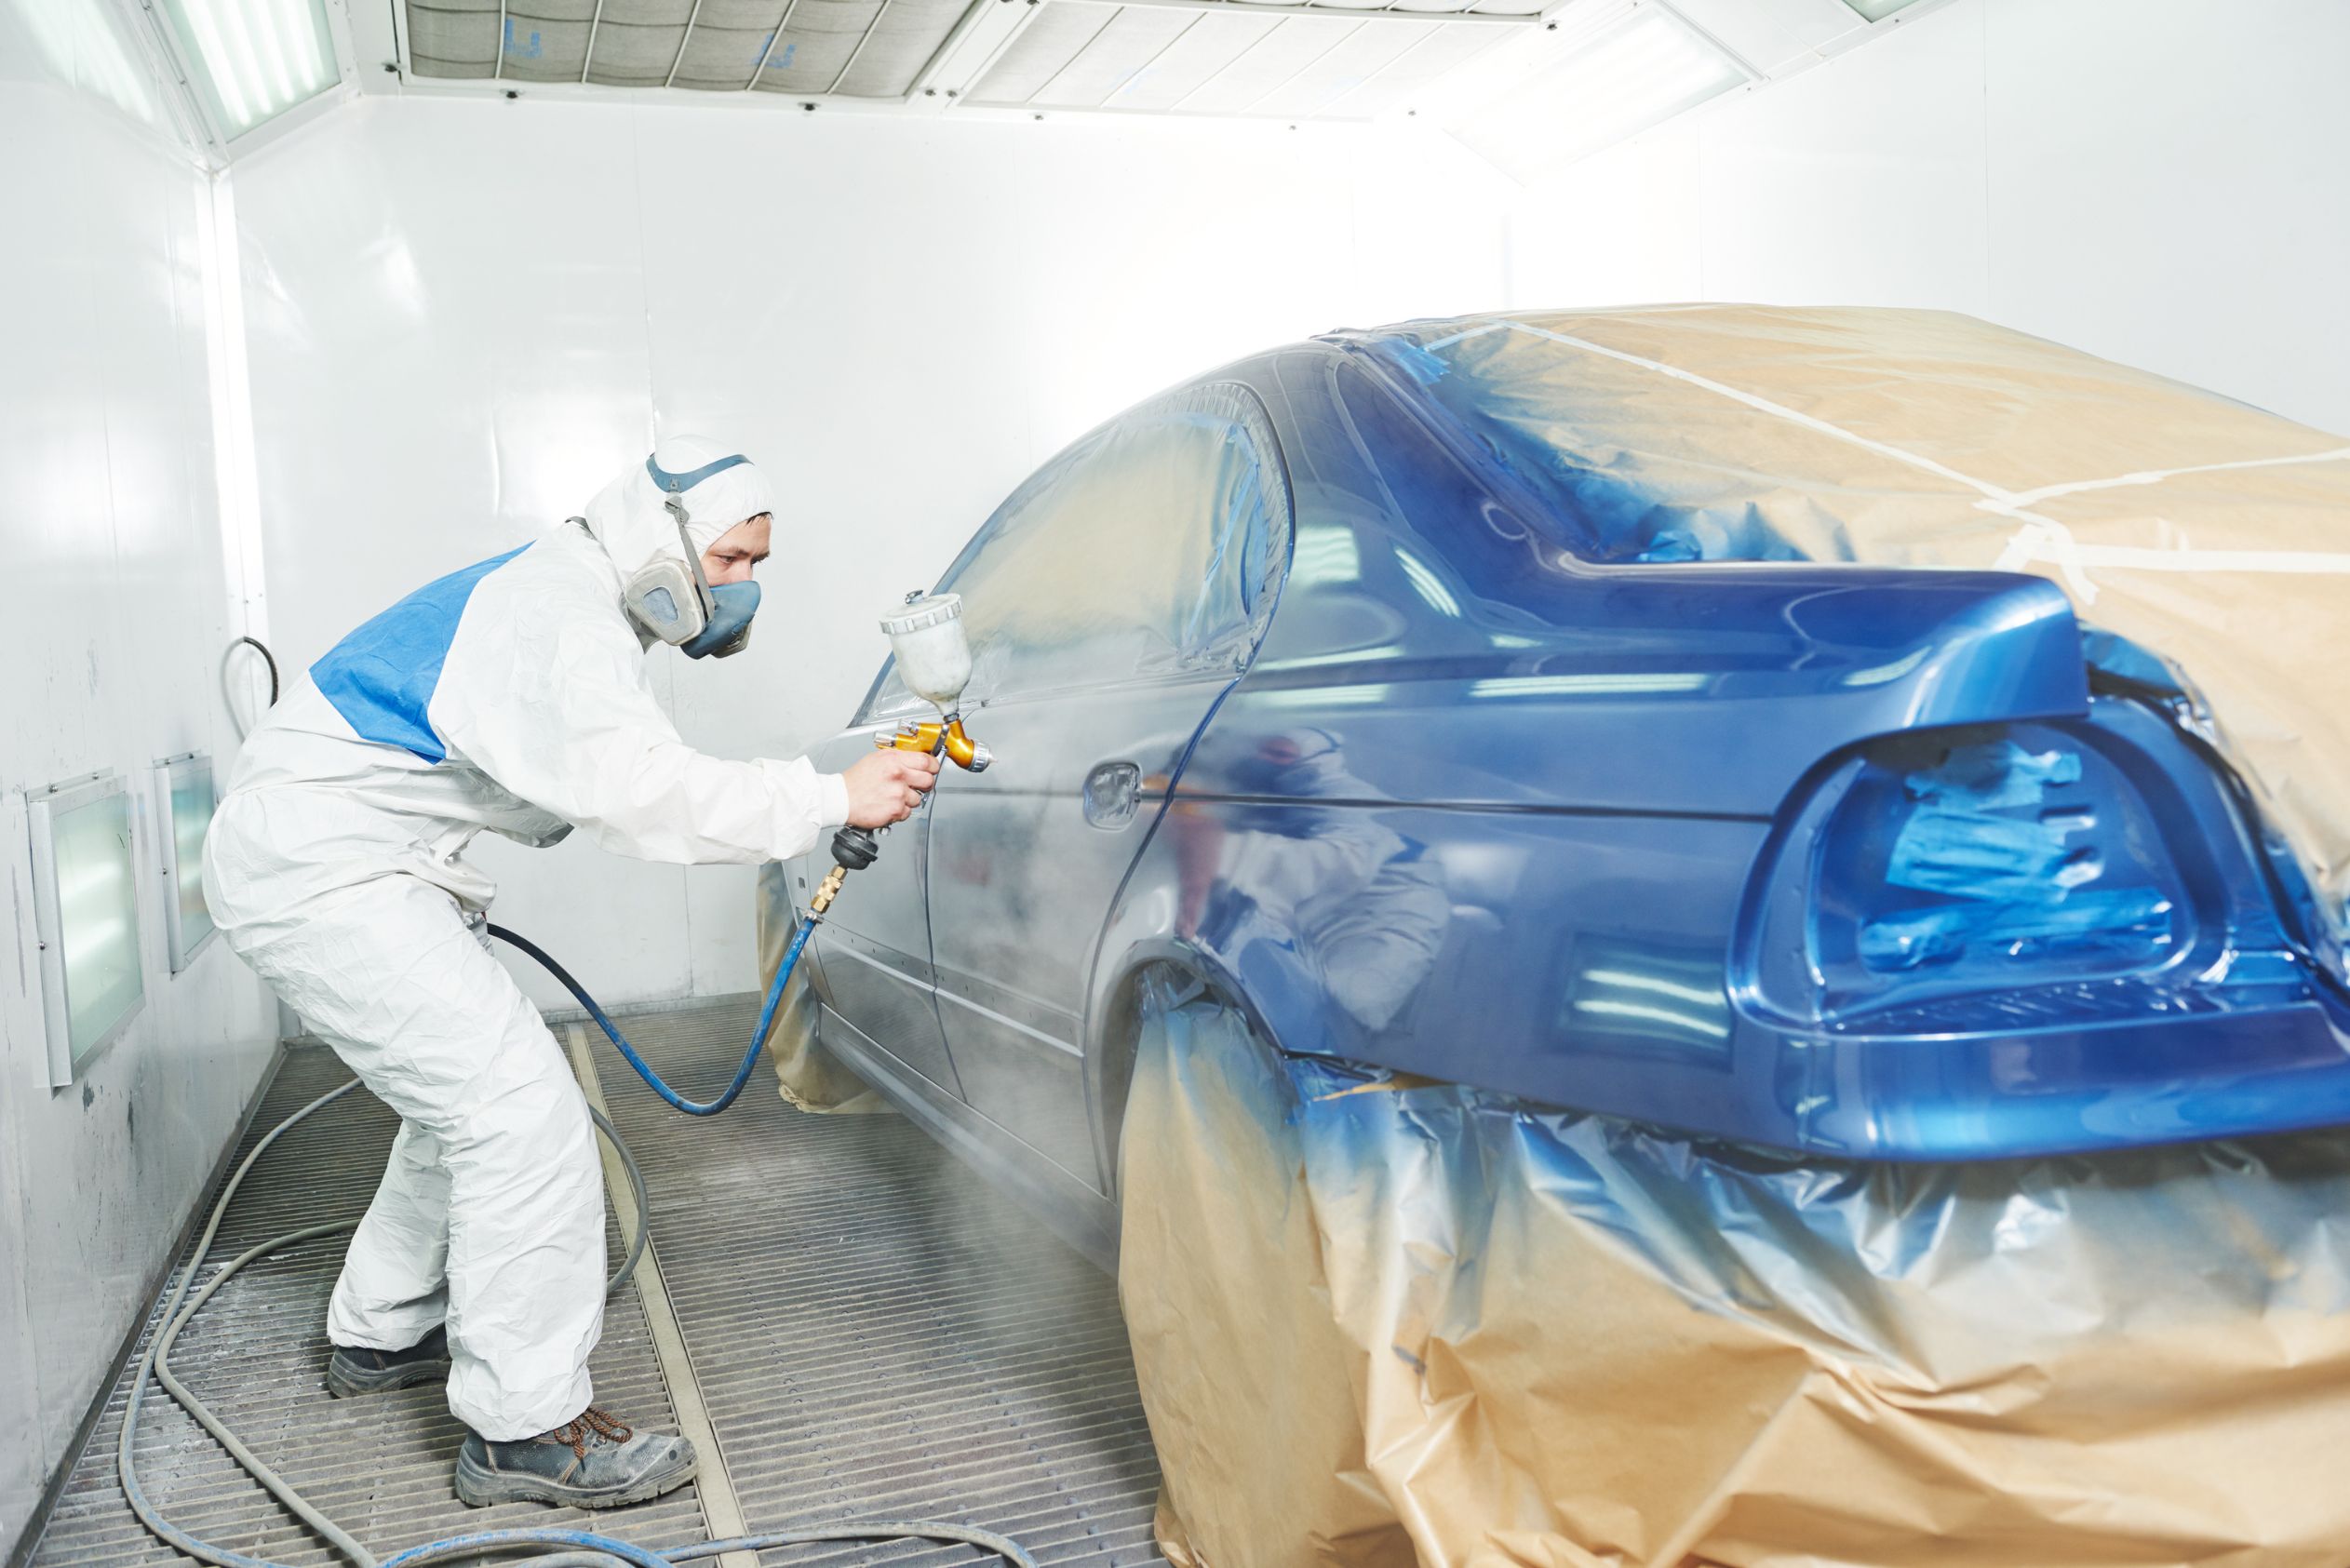 Man spray painting new car